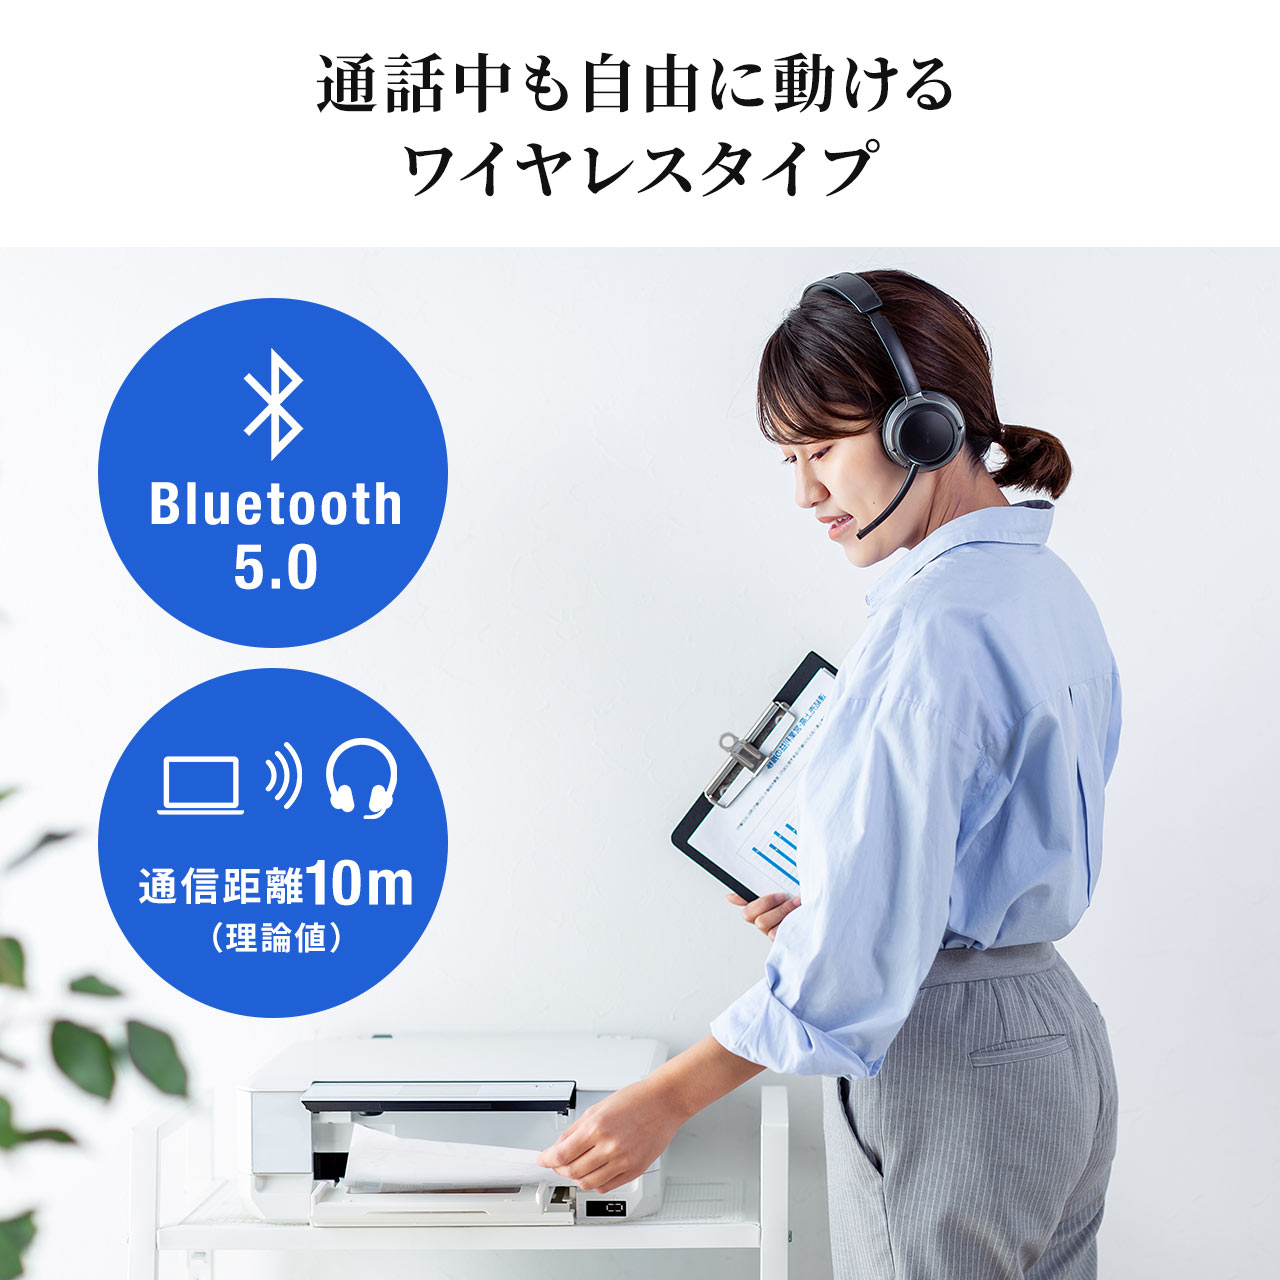 BluetoothwbhZbgEgX~b^[Zbg 402-BTSH018SET1